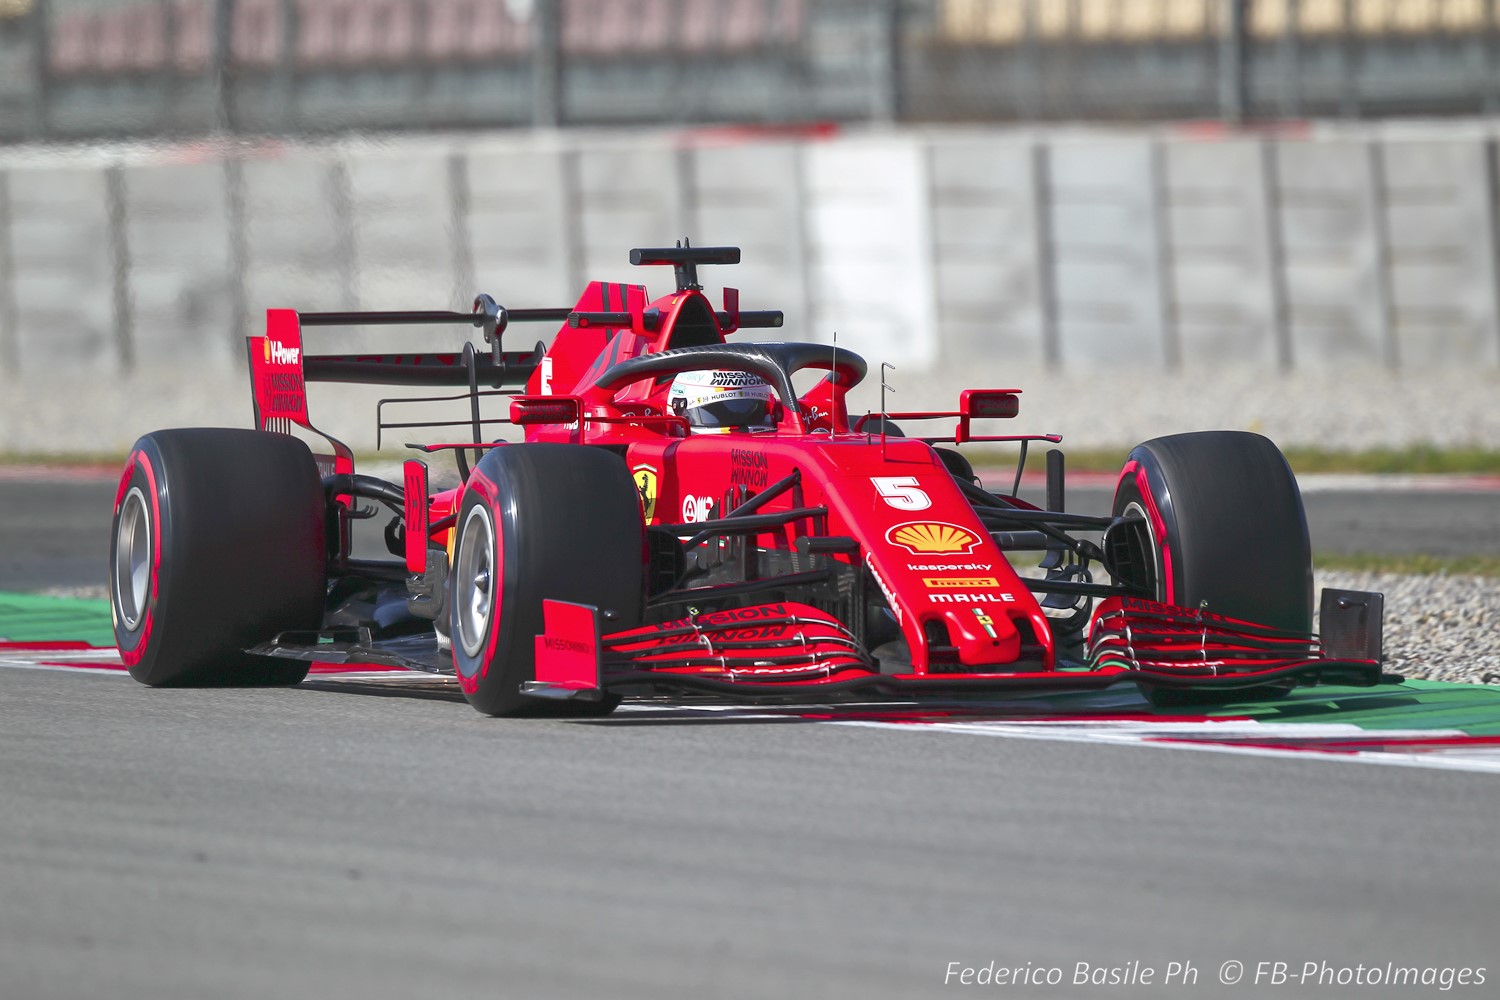 How bad will Mercedes destroy Ferrari this year?